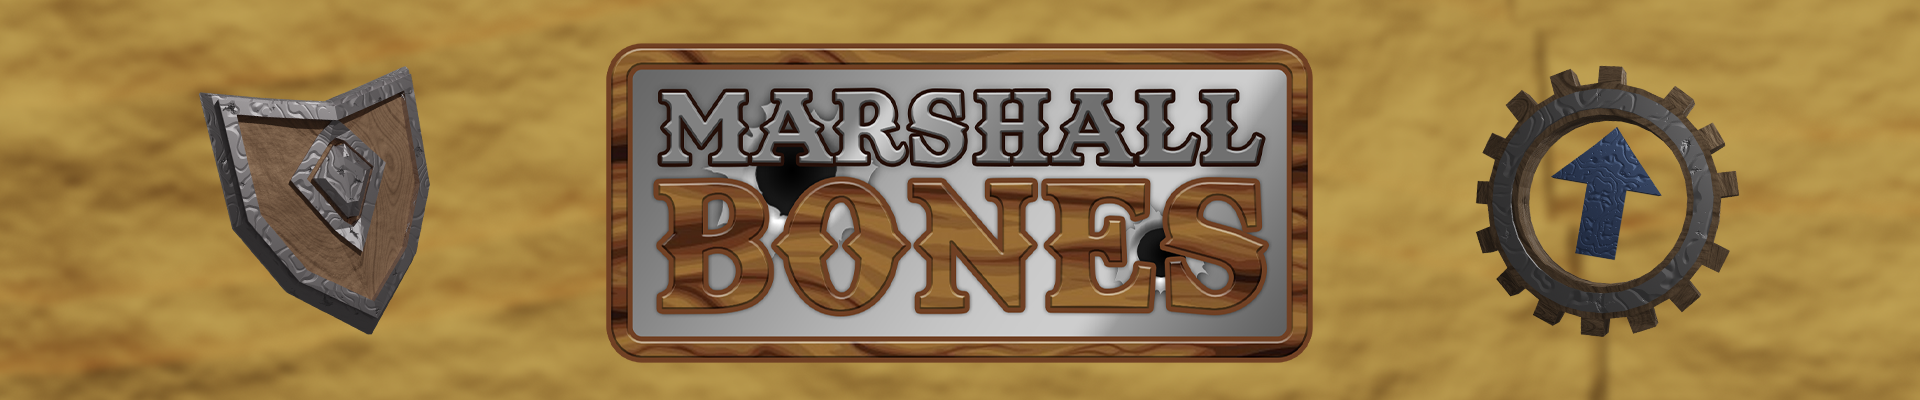 Marshall Bones